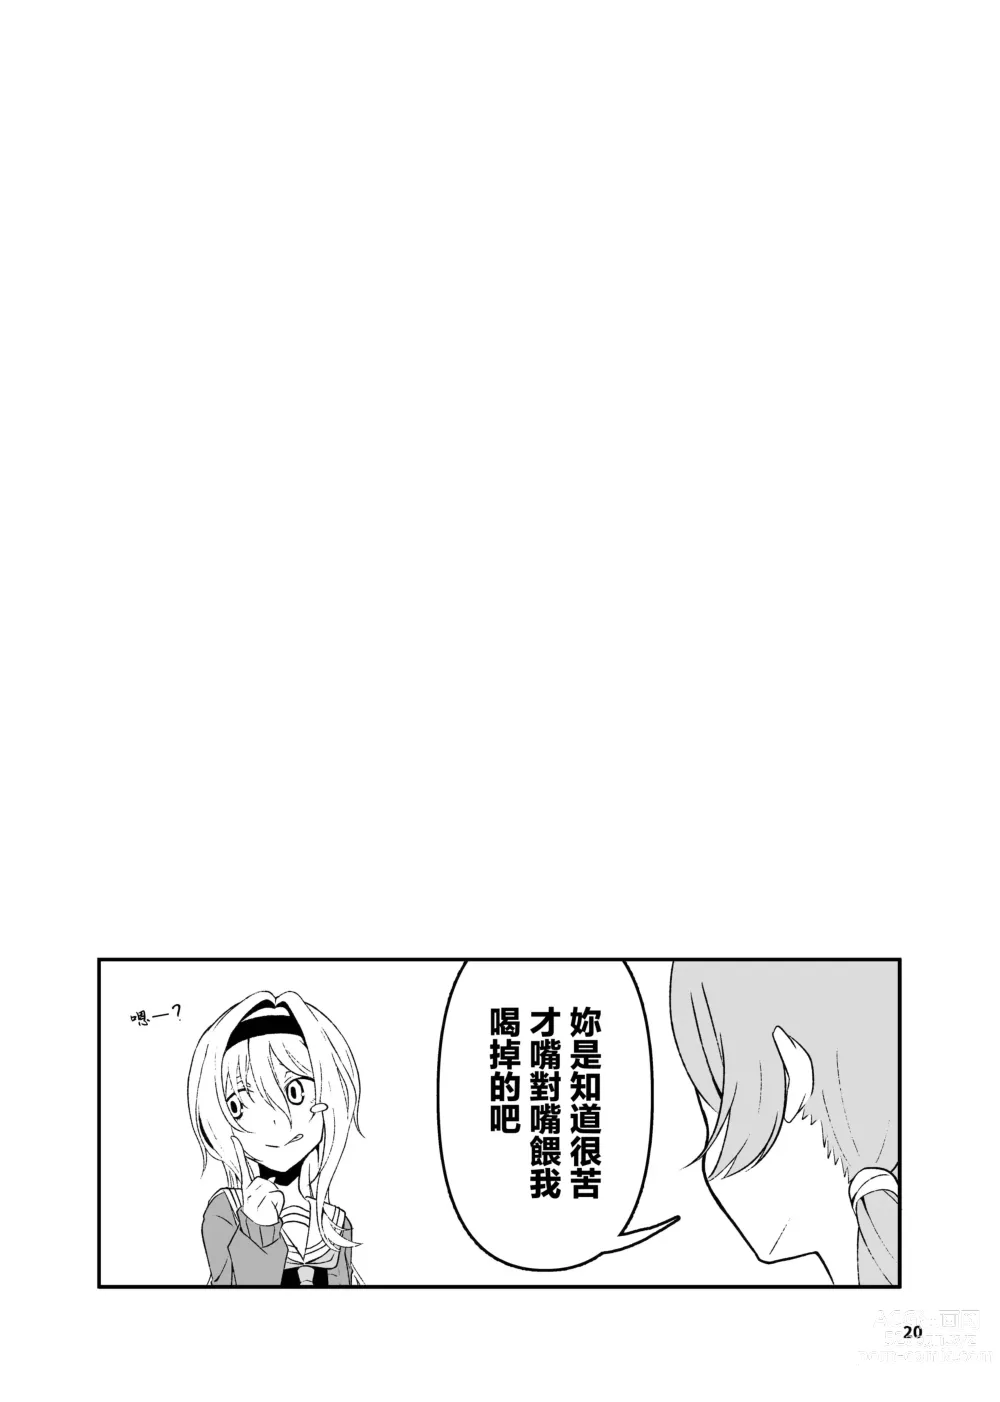 Page 21 of doujinshi 黑埼千歲黃色漫畫總編本